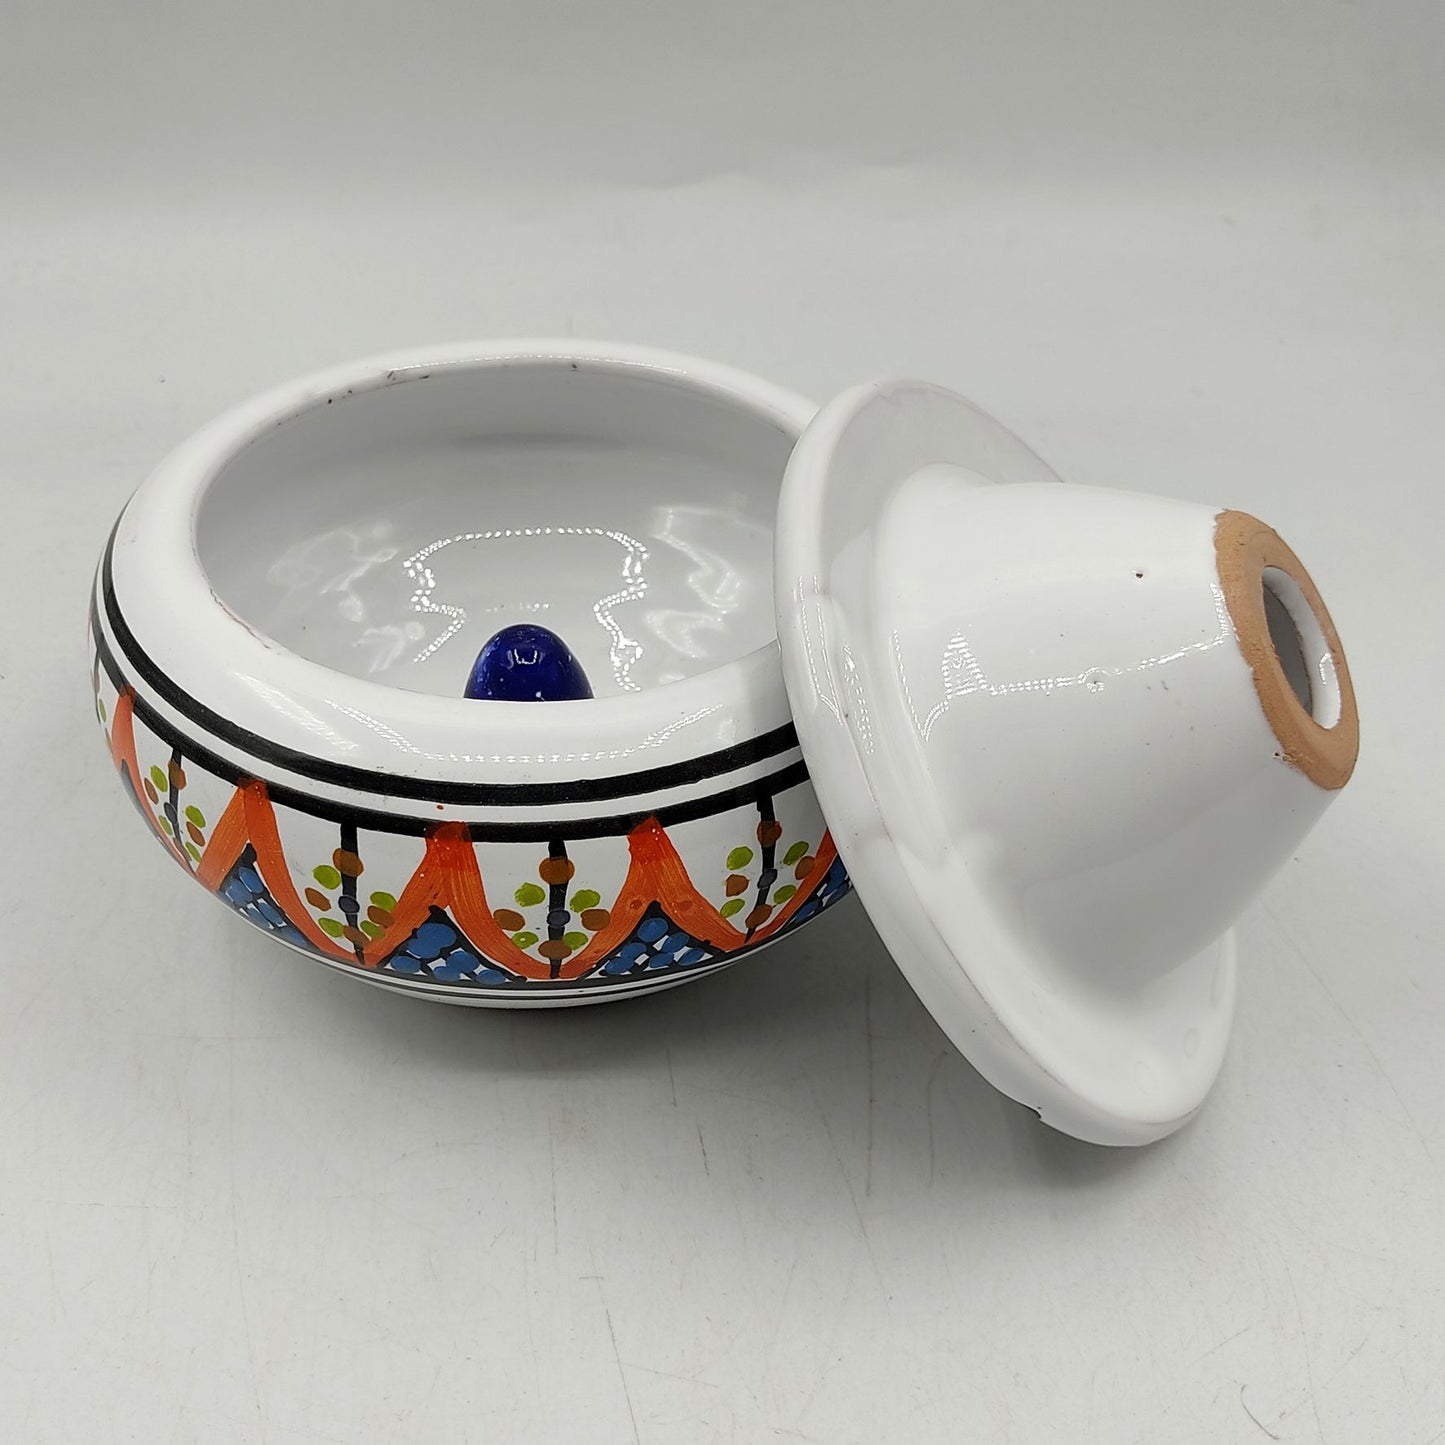 Etnico Arredo Posacenere Ceramica Antiodore Tunisina Marocchina 2007211203